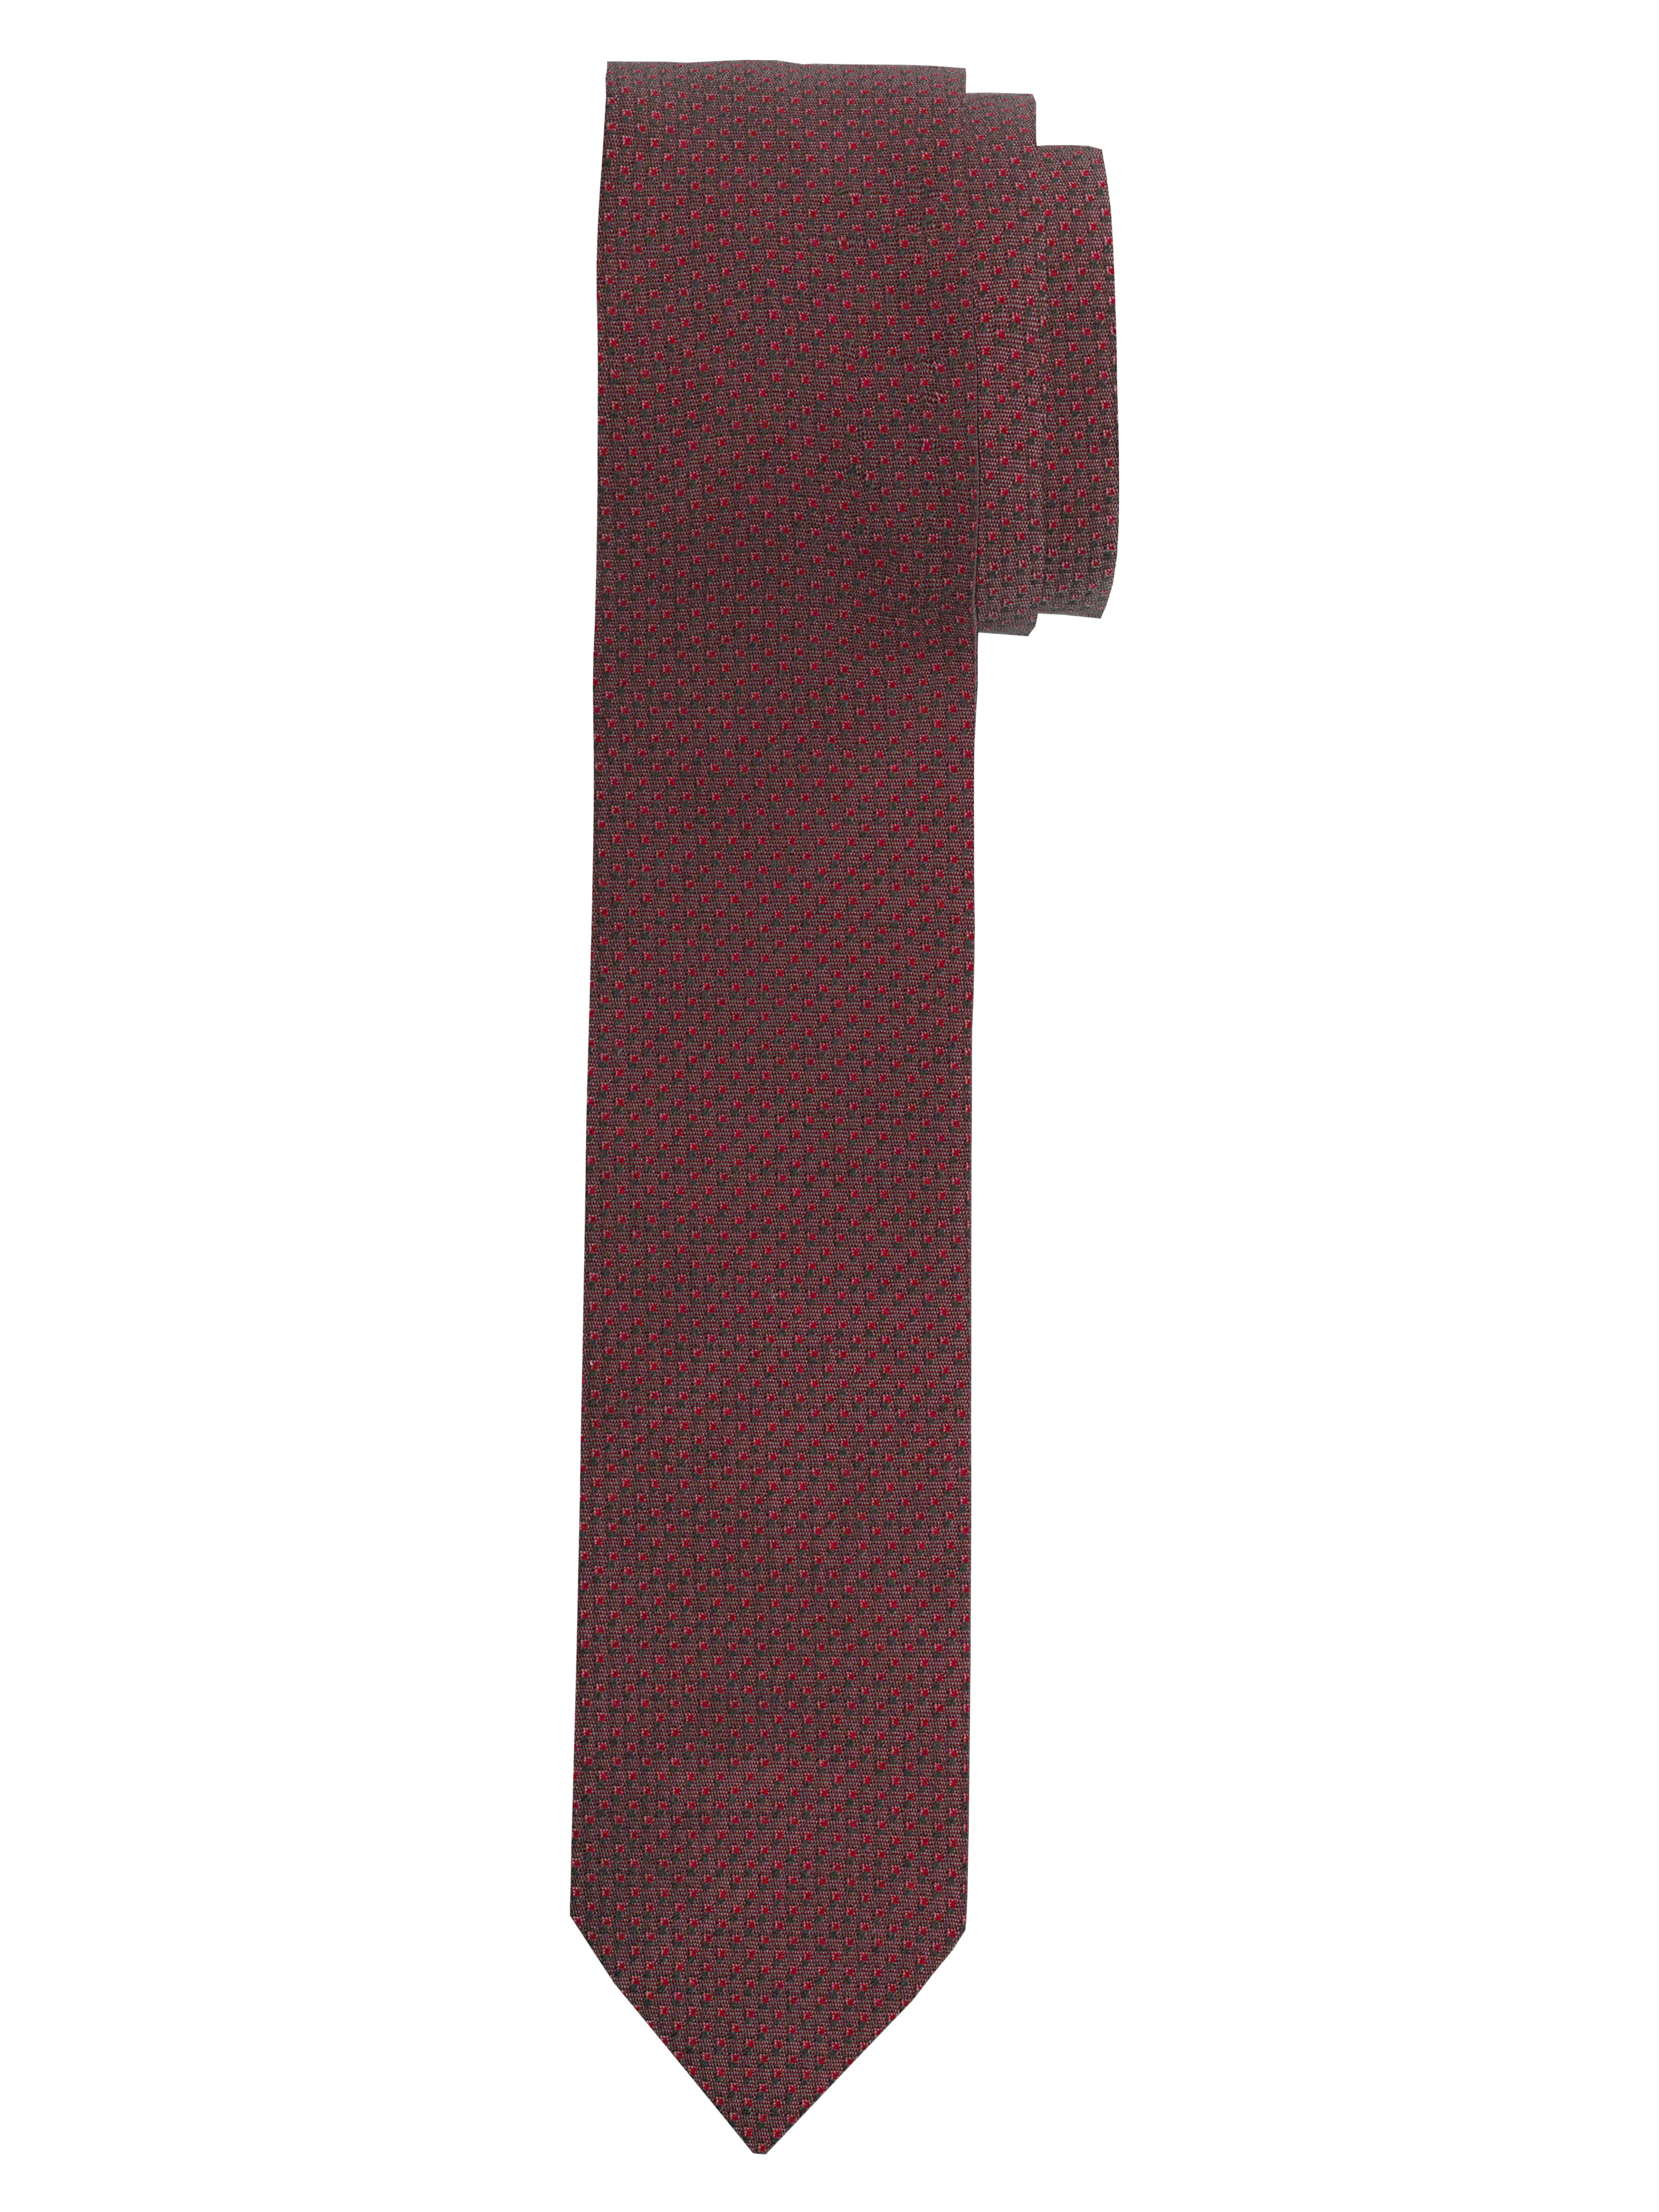 OLYMP Krawatte, Rot - 5 cm super | 1722003501 slim